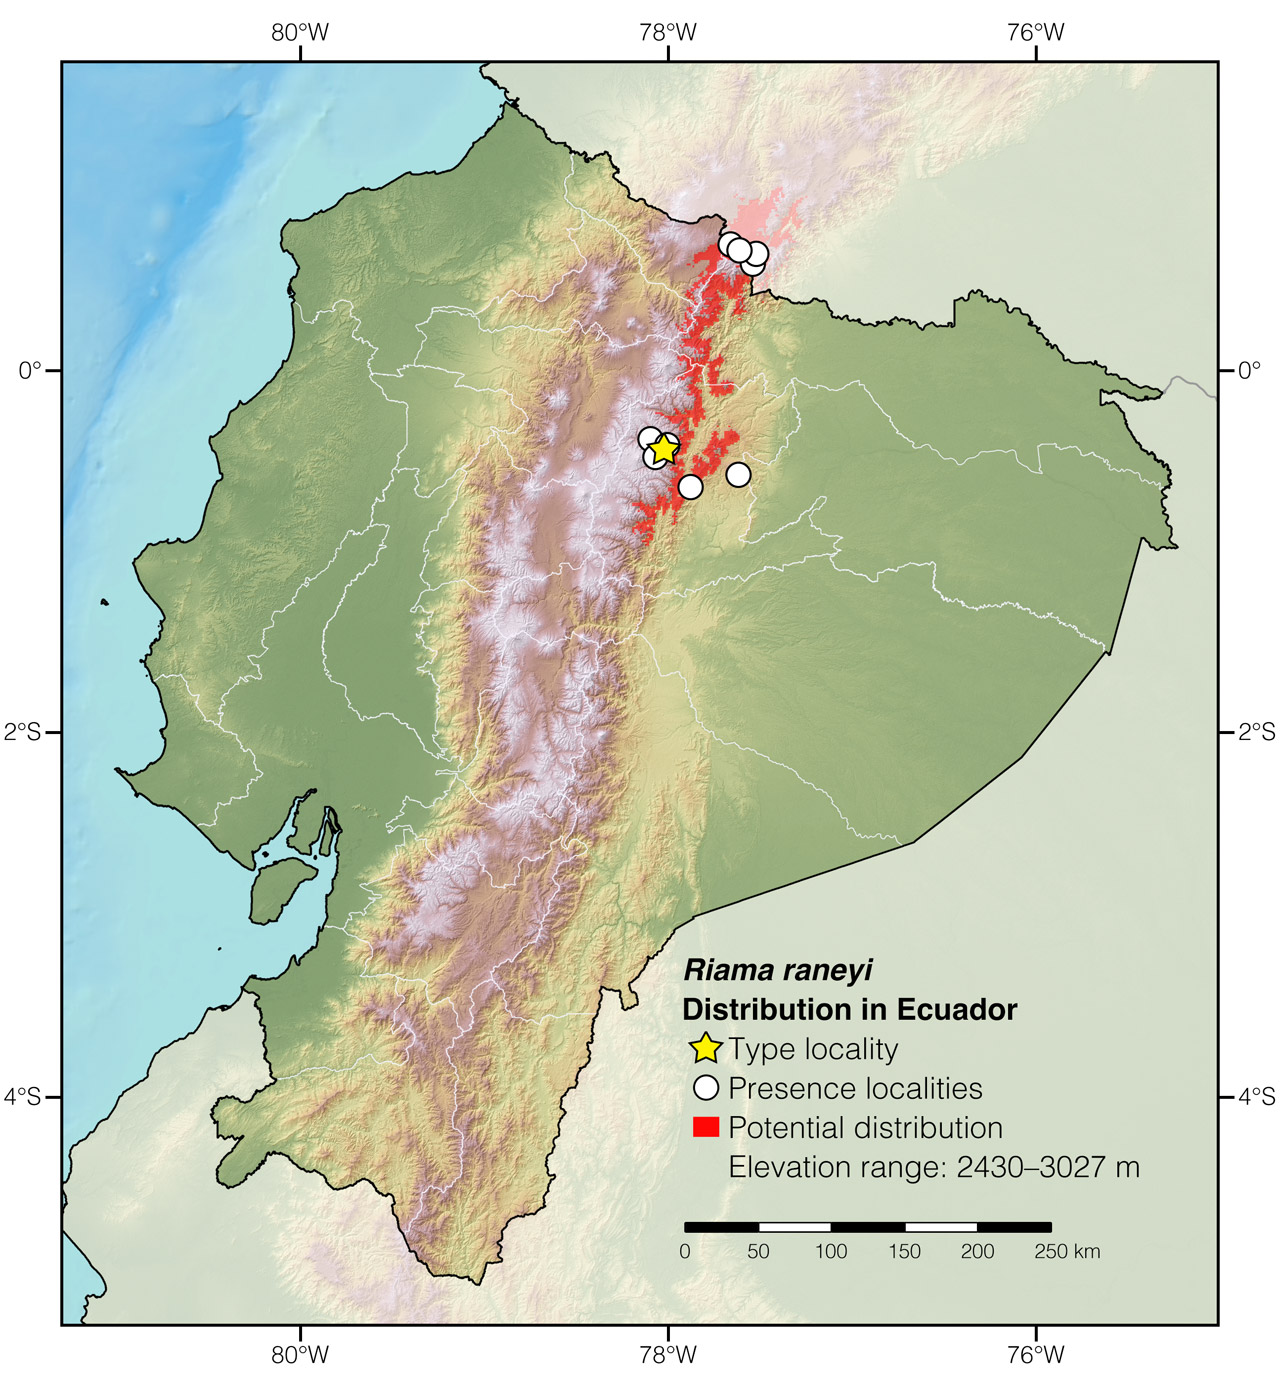 Distribution of Riama raneyi in Ecuador